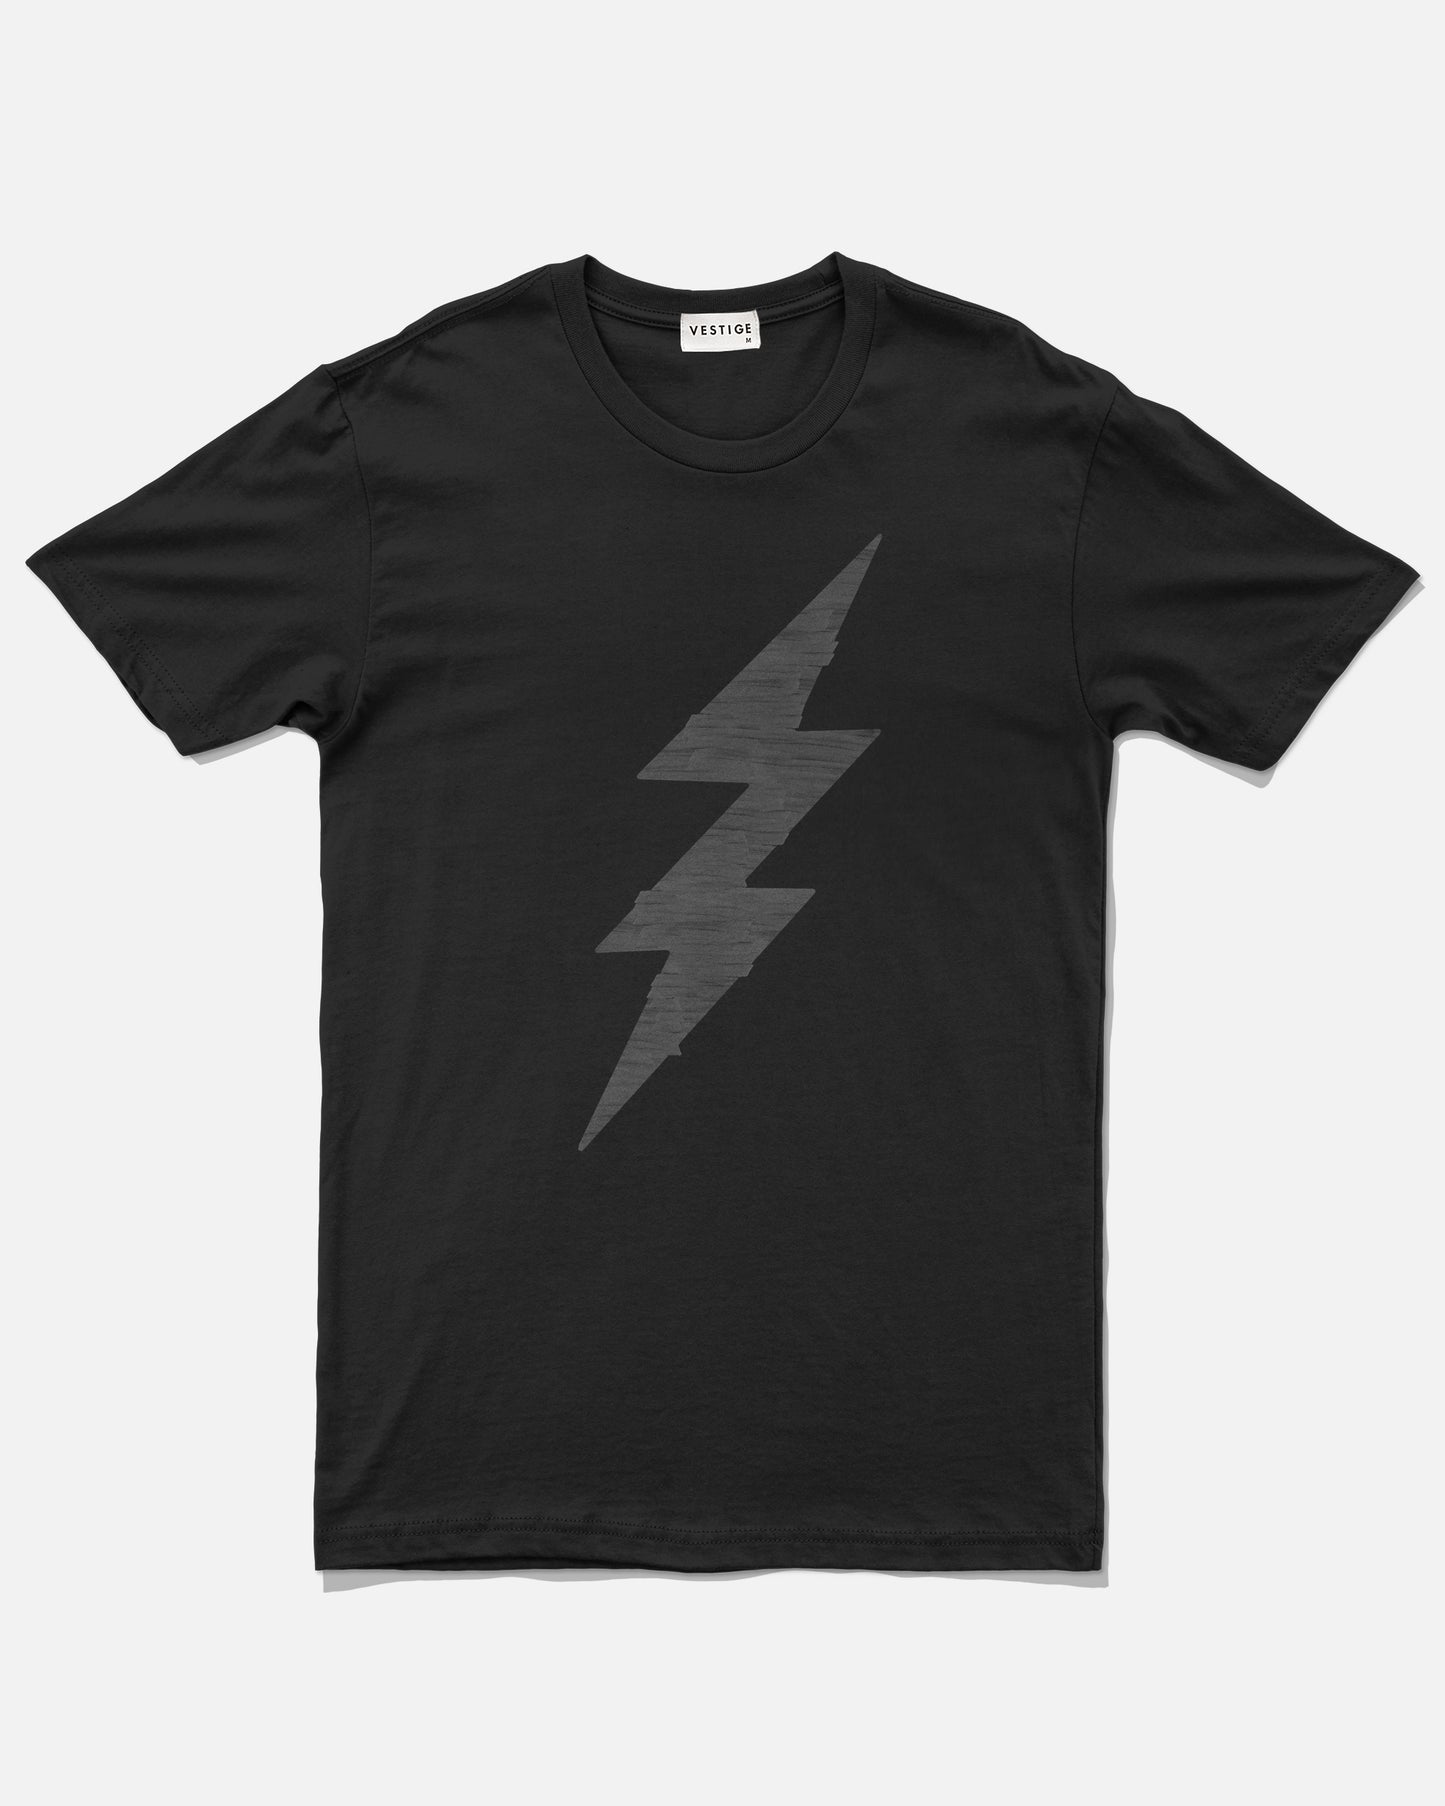 Bolt T-Shirt, Black